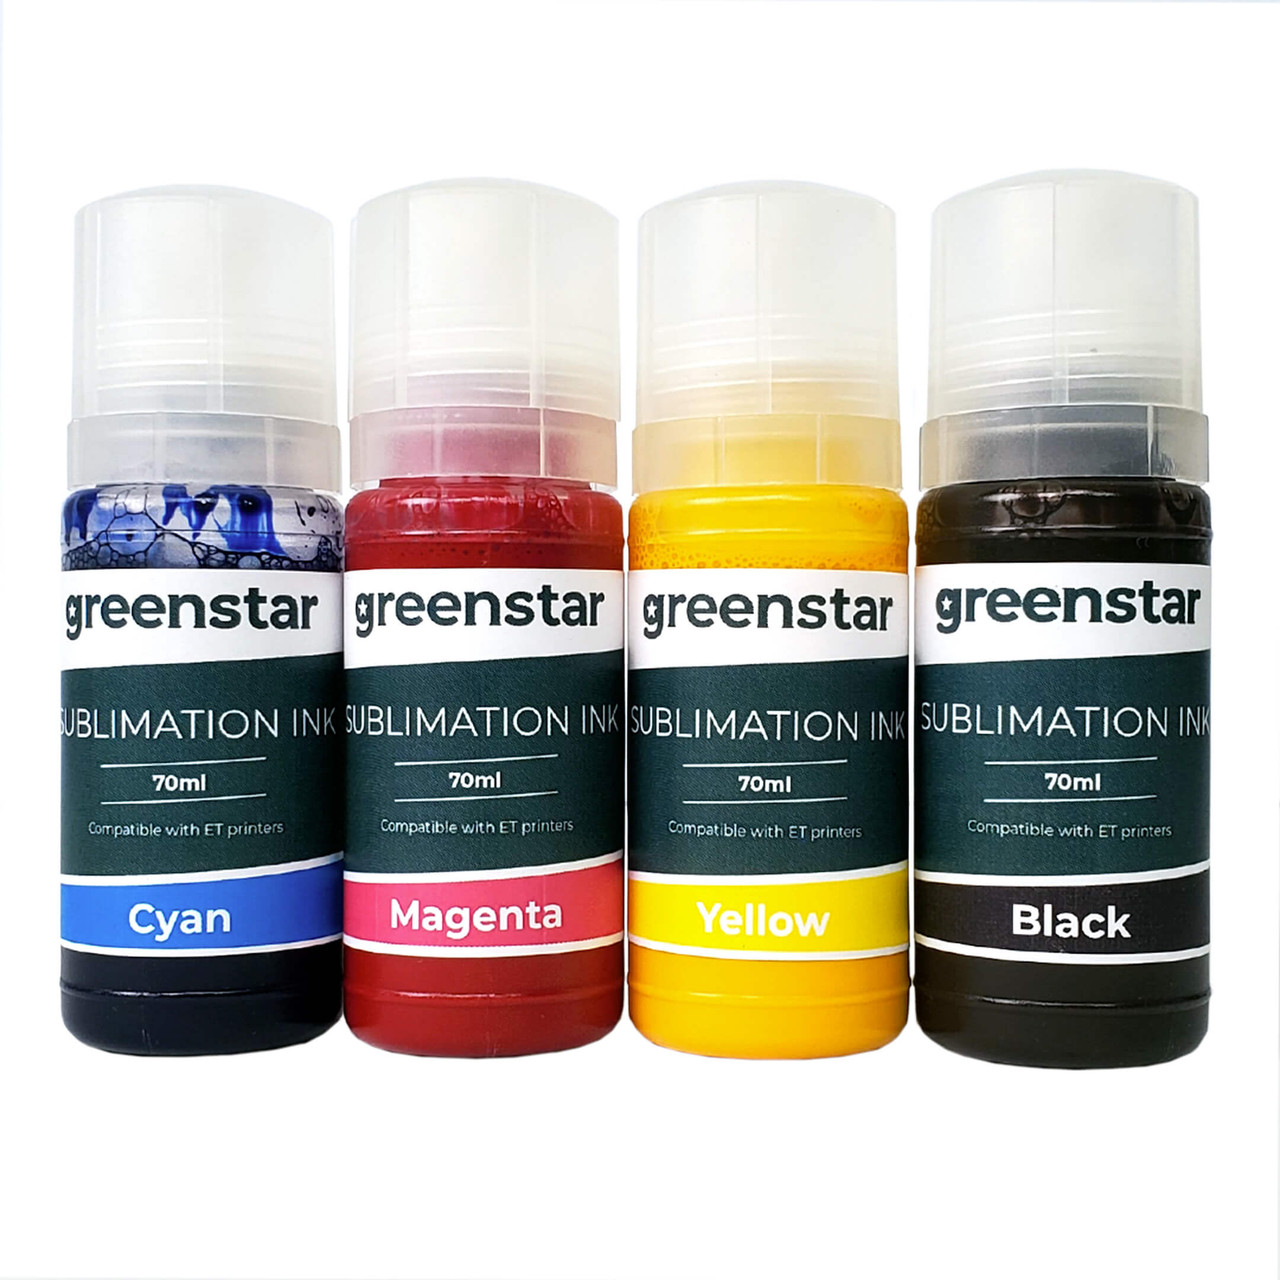 Greenstar Dye Sublimation Ink for Epson EcoTank Printers